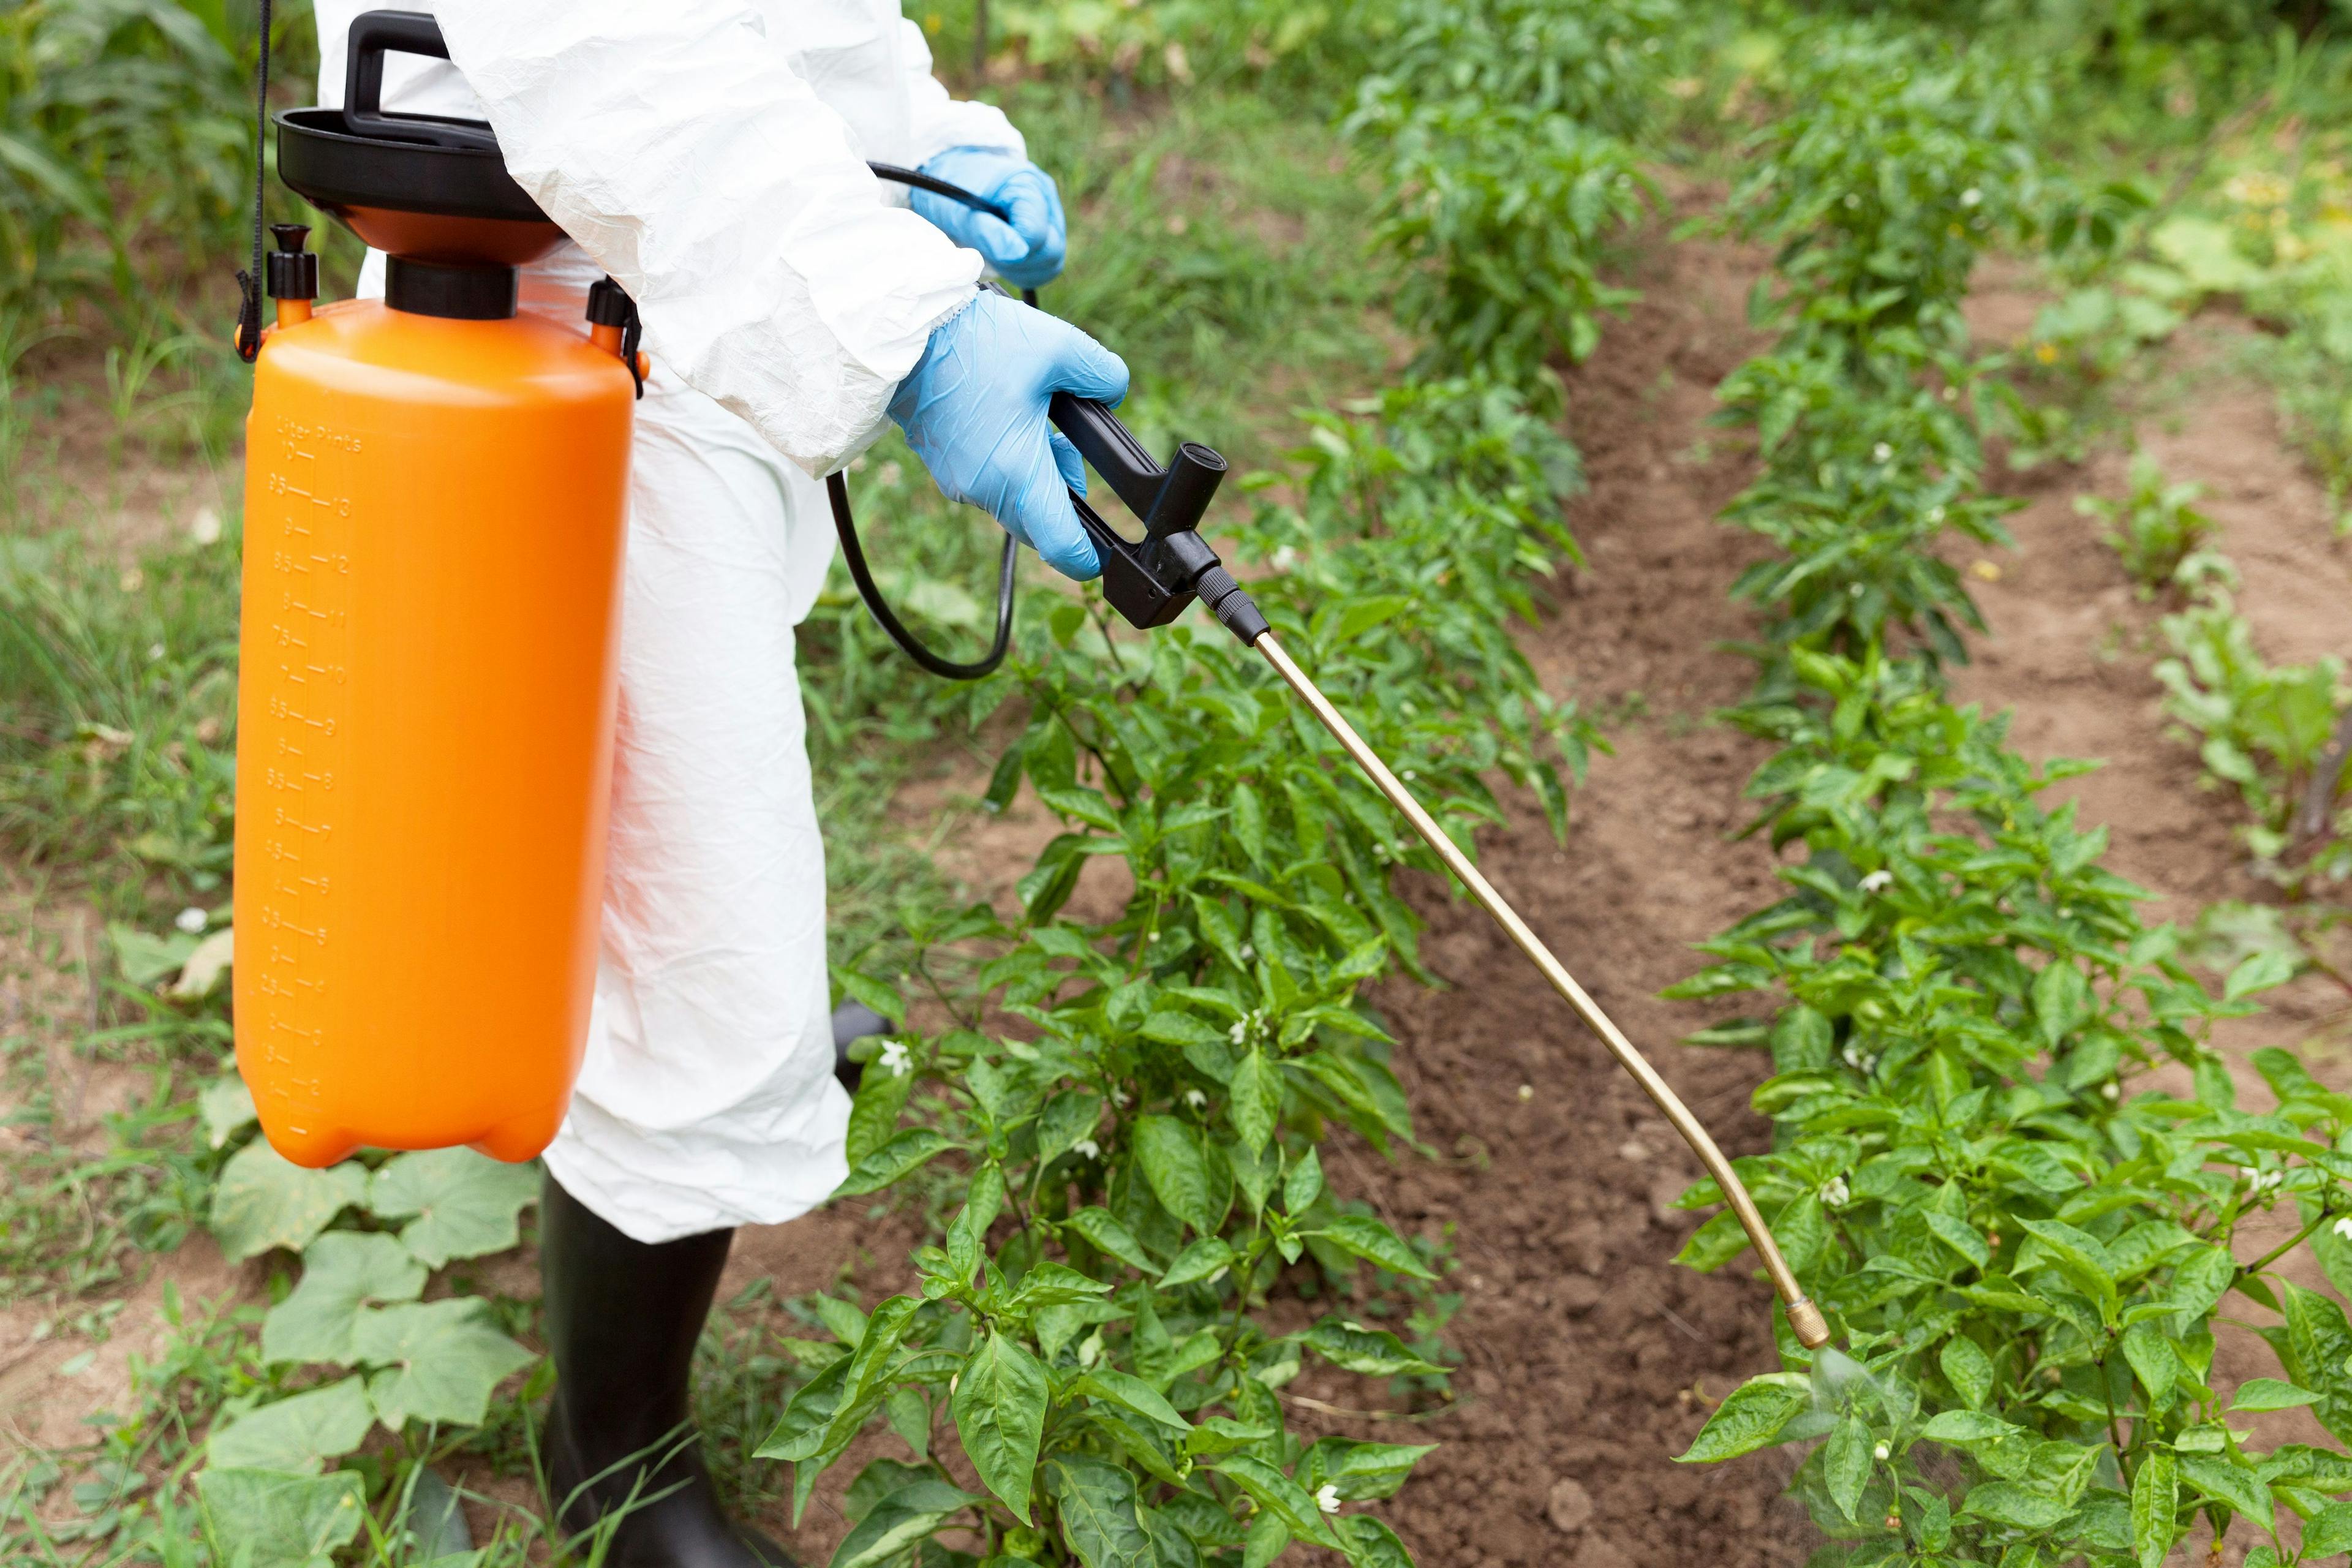 Herbicide spraying. Non-organic vegetables. | Image Credit: © wellphoto - stock.adobe.com